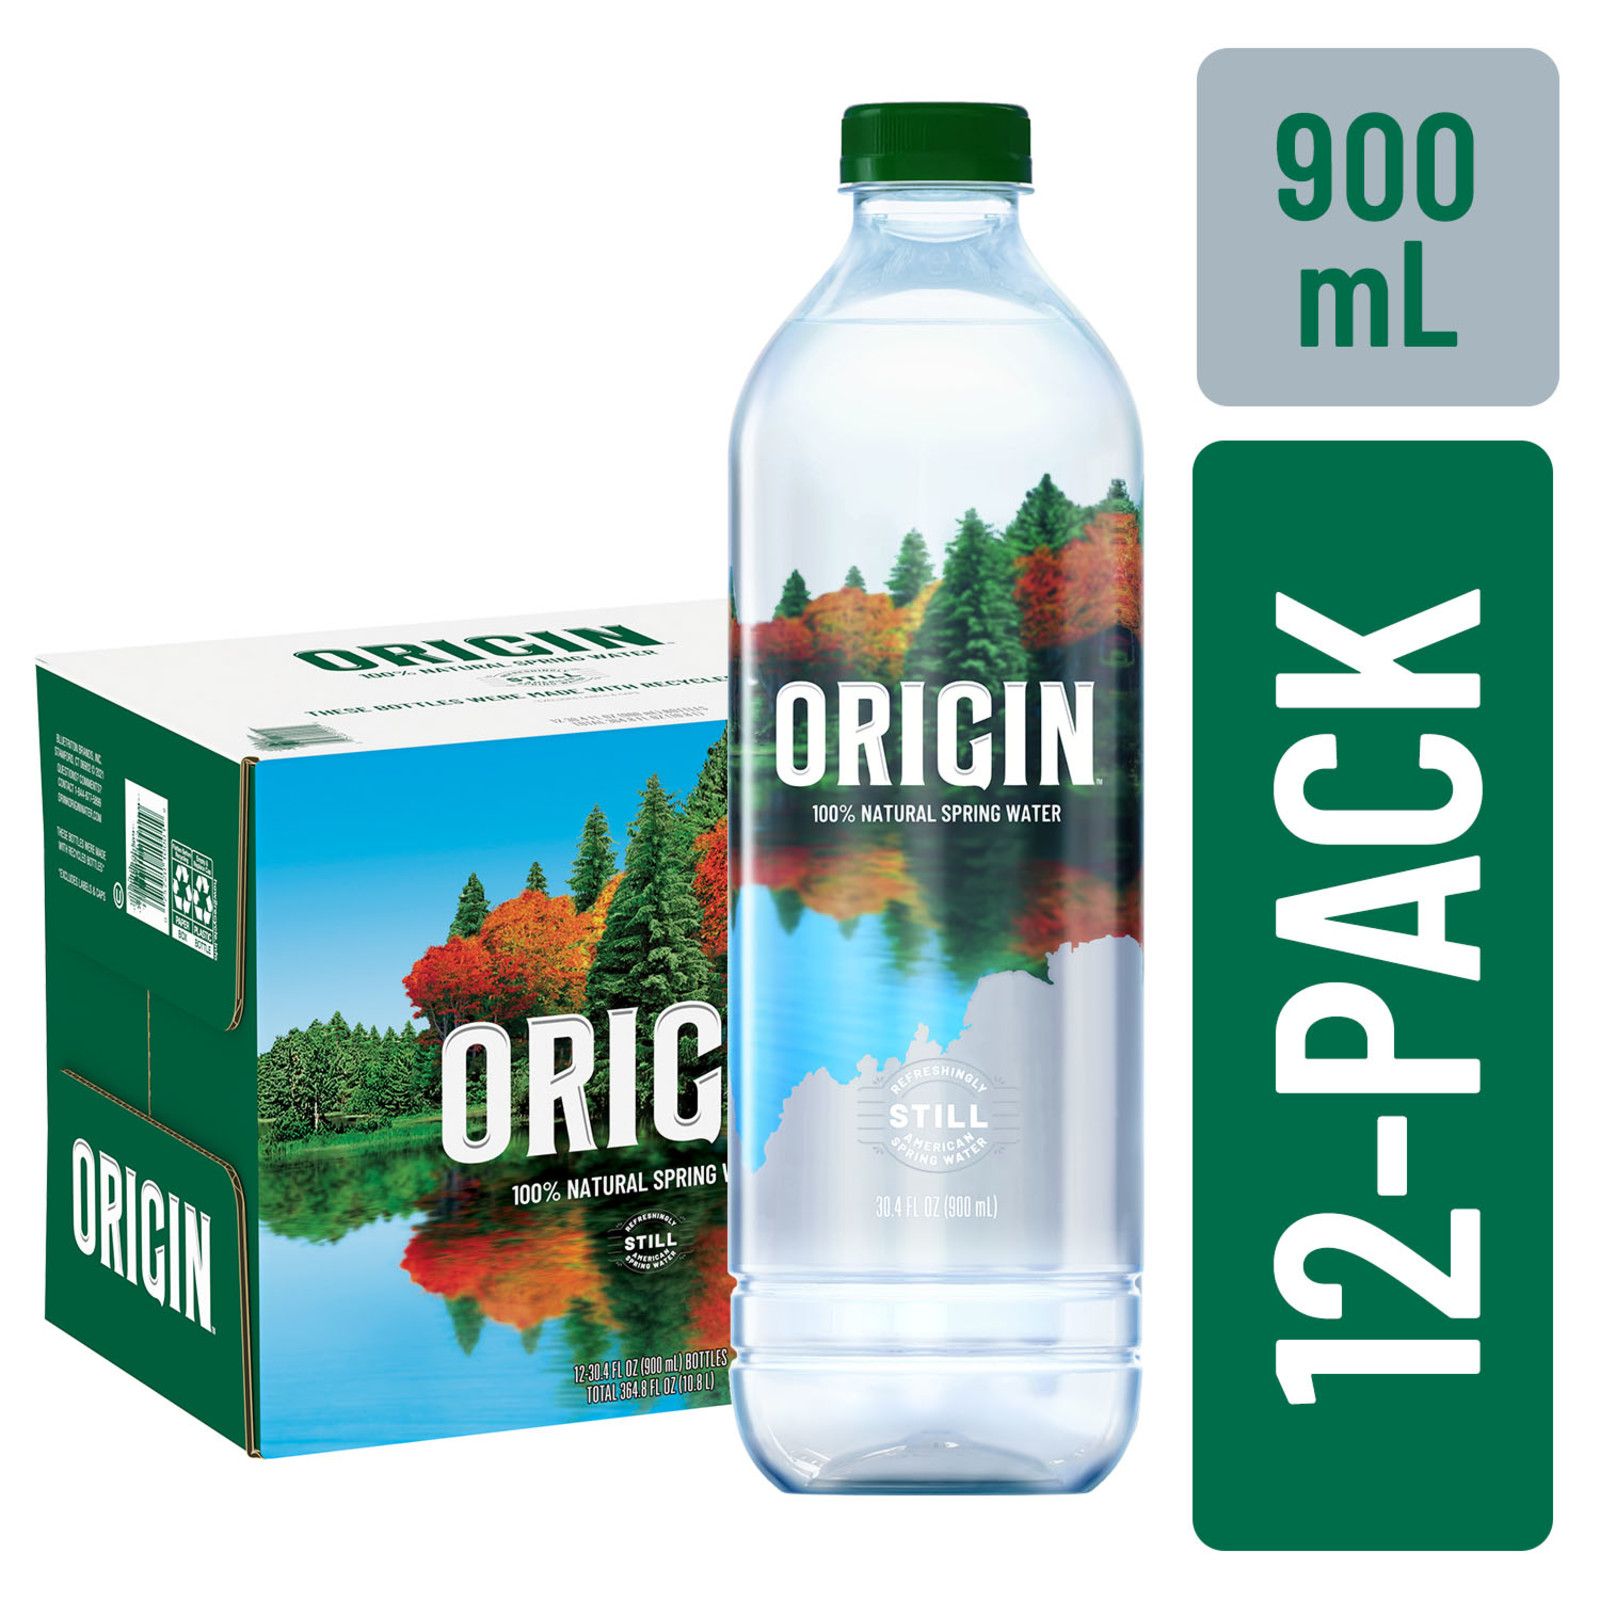 Poland Spring® Bottled Water, 12 oz 12-Pack